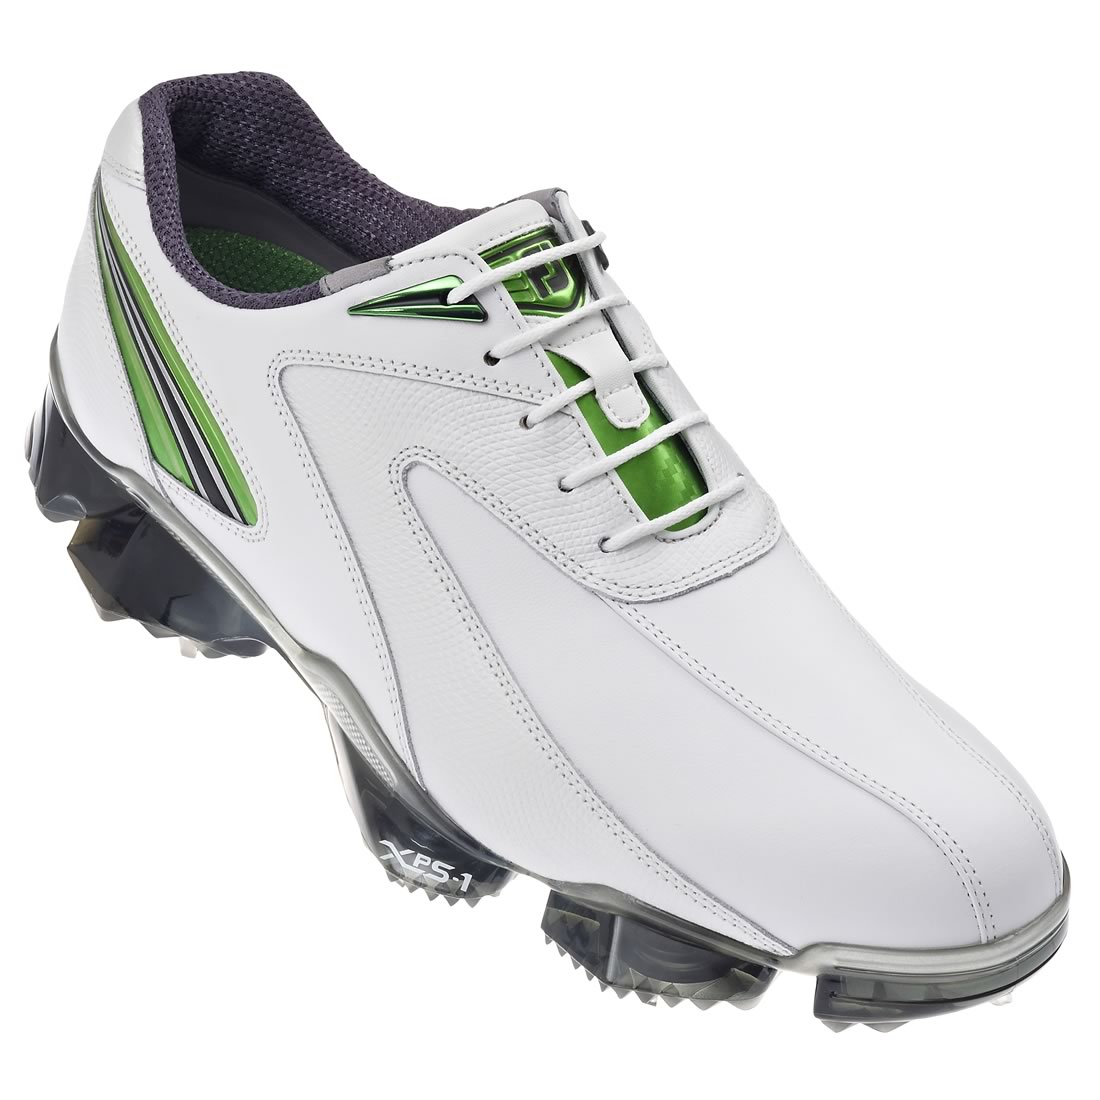 FootJoy XPS Golf Shoes White/Green #56049